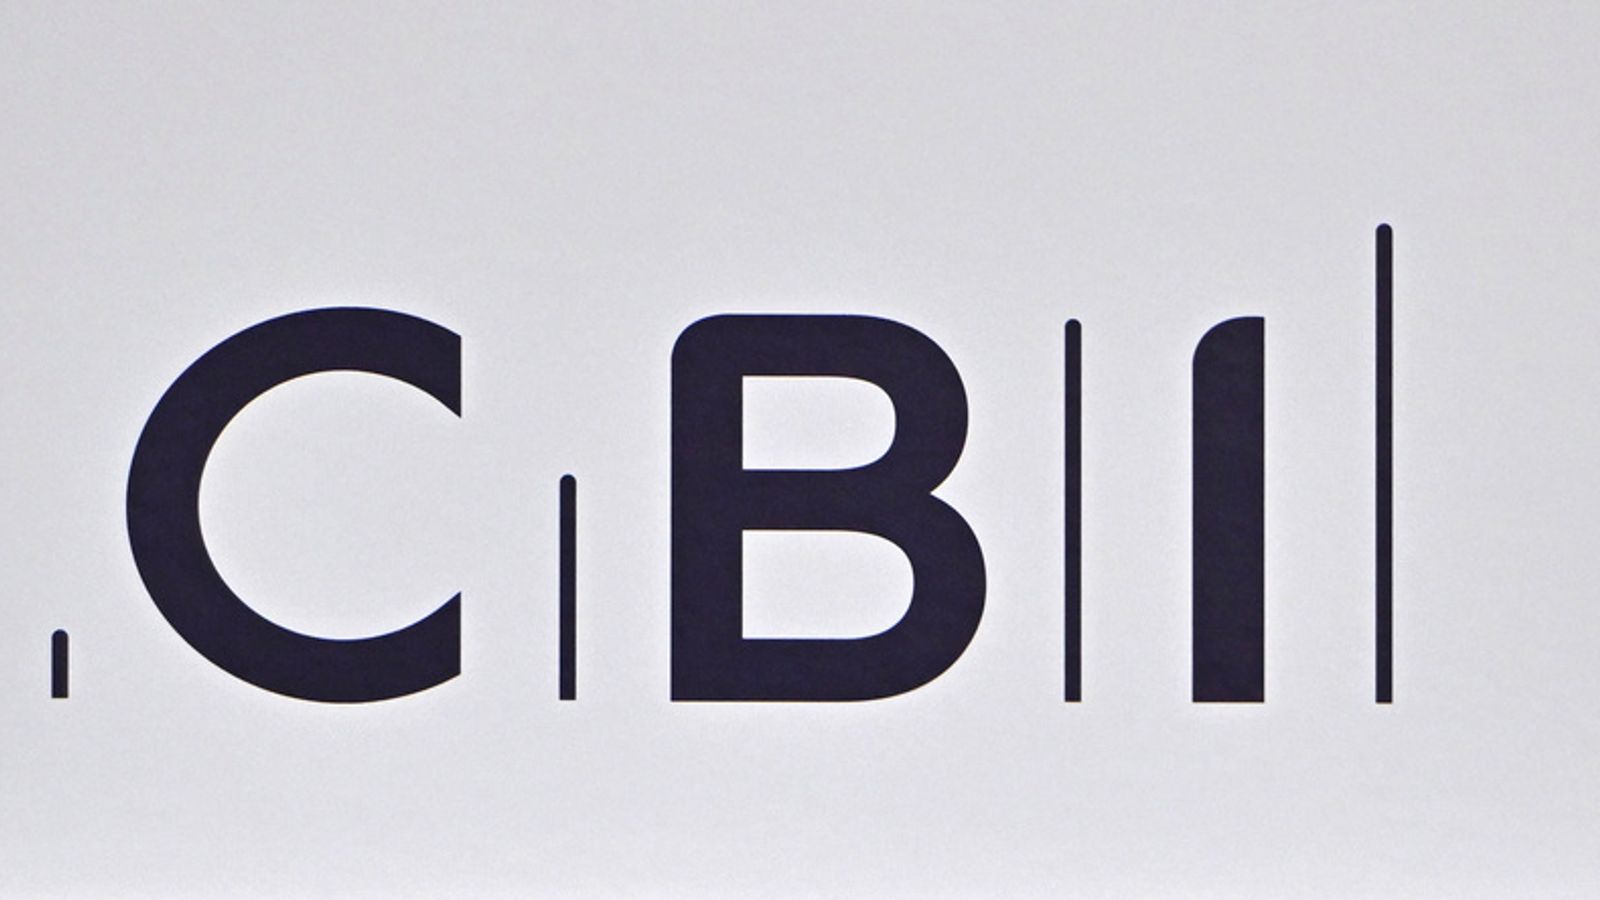 CBI faces ridicule over senior executive's 'transparency' claim